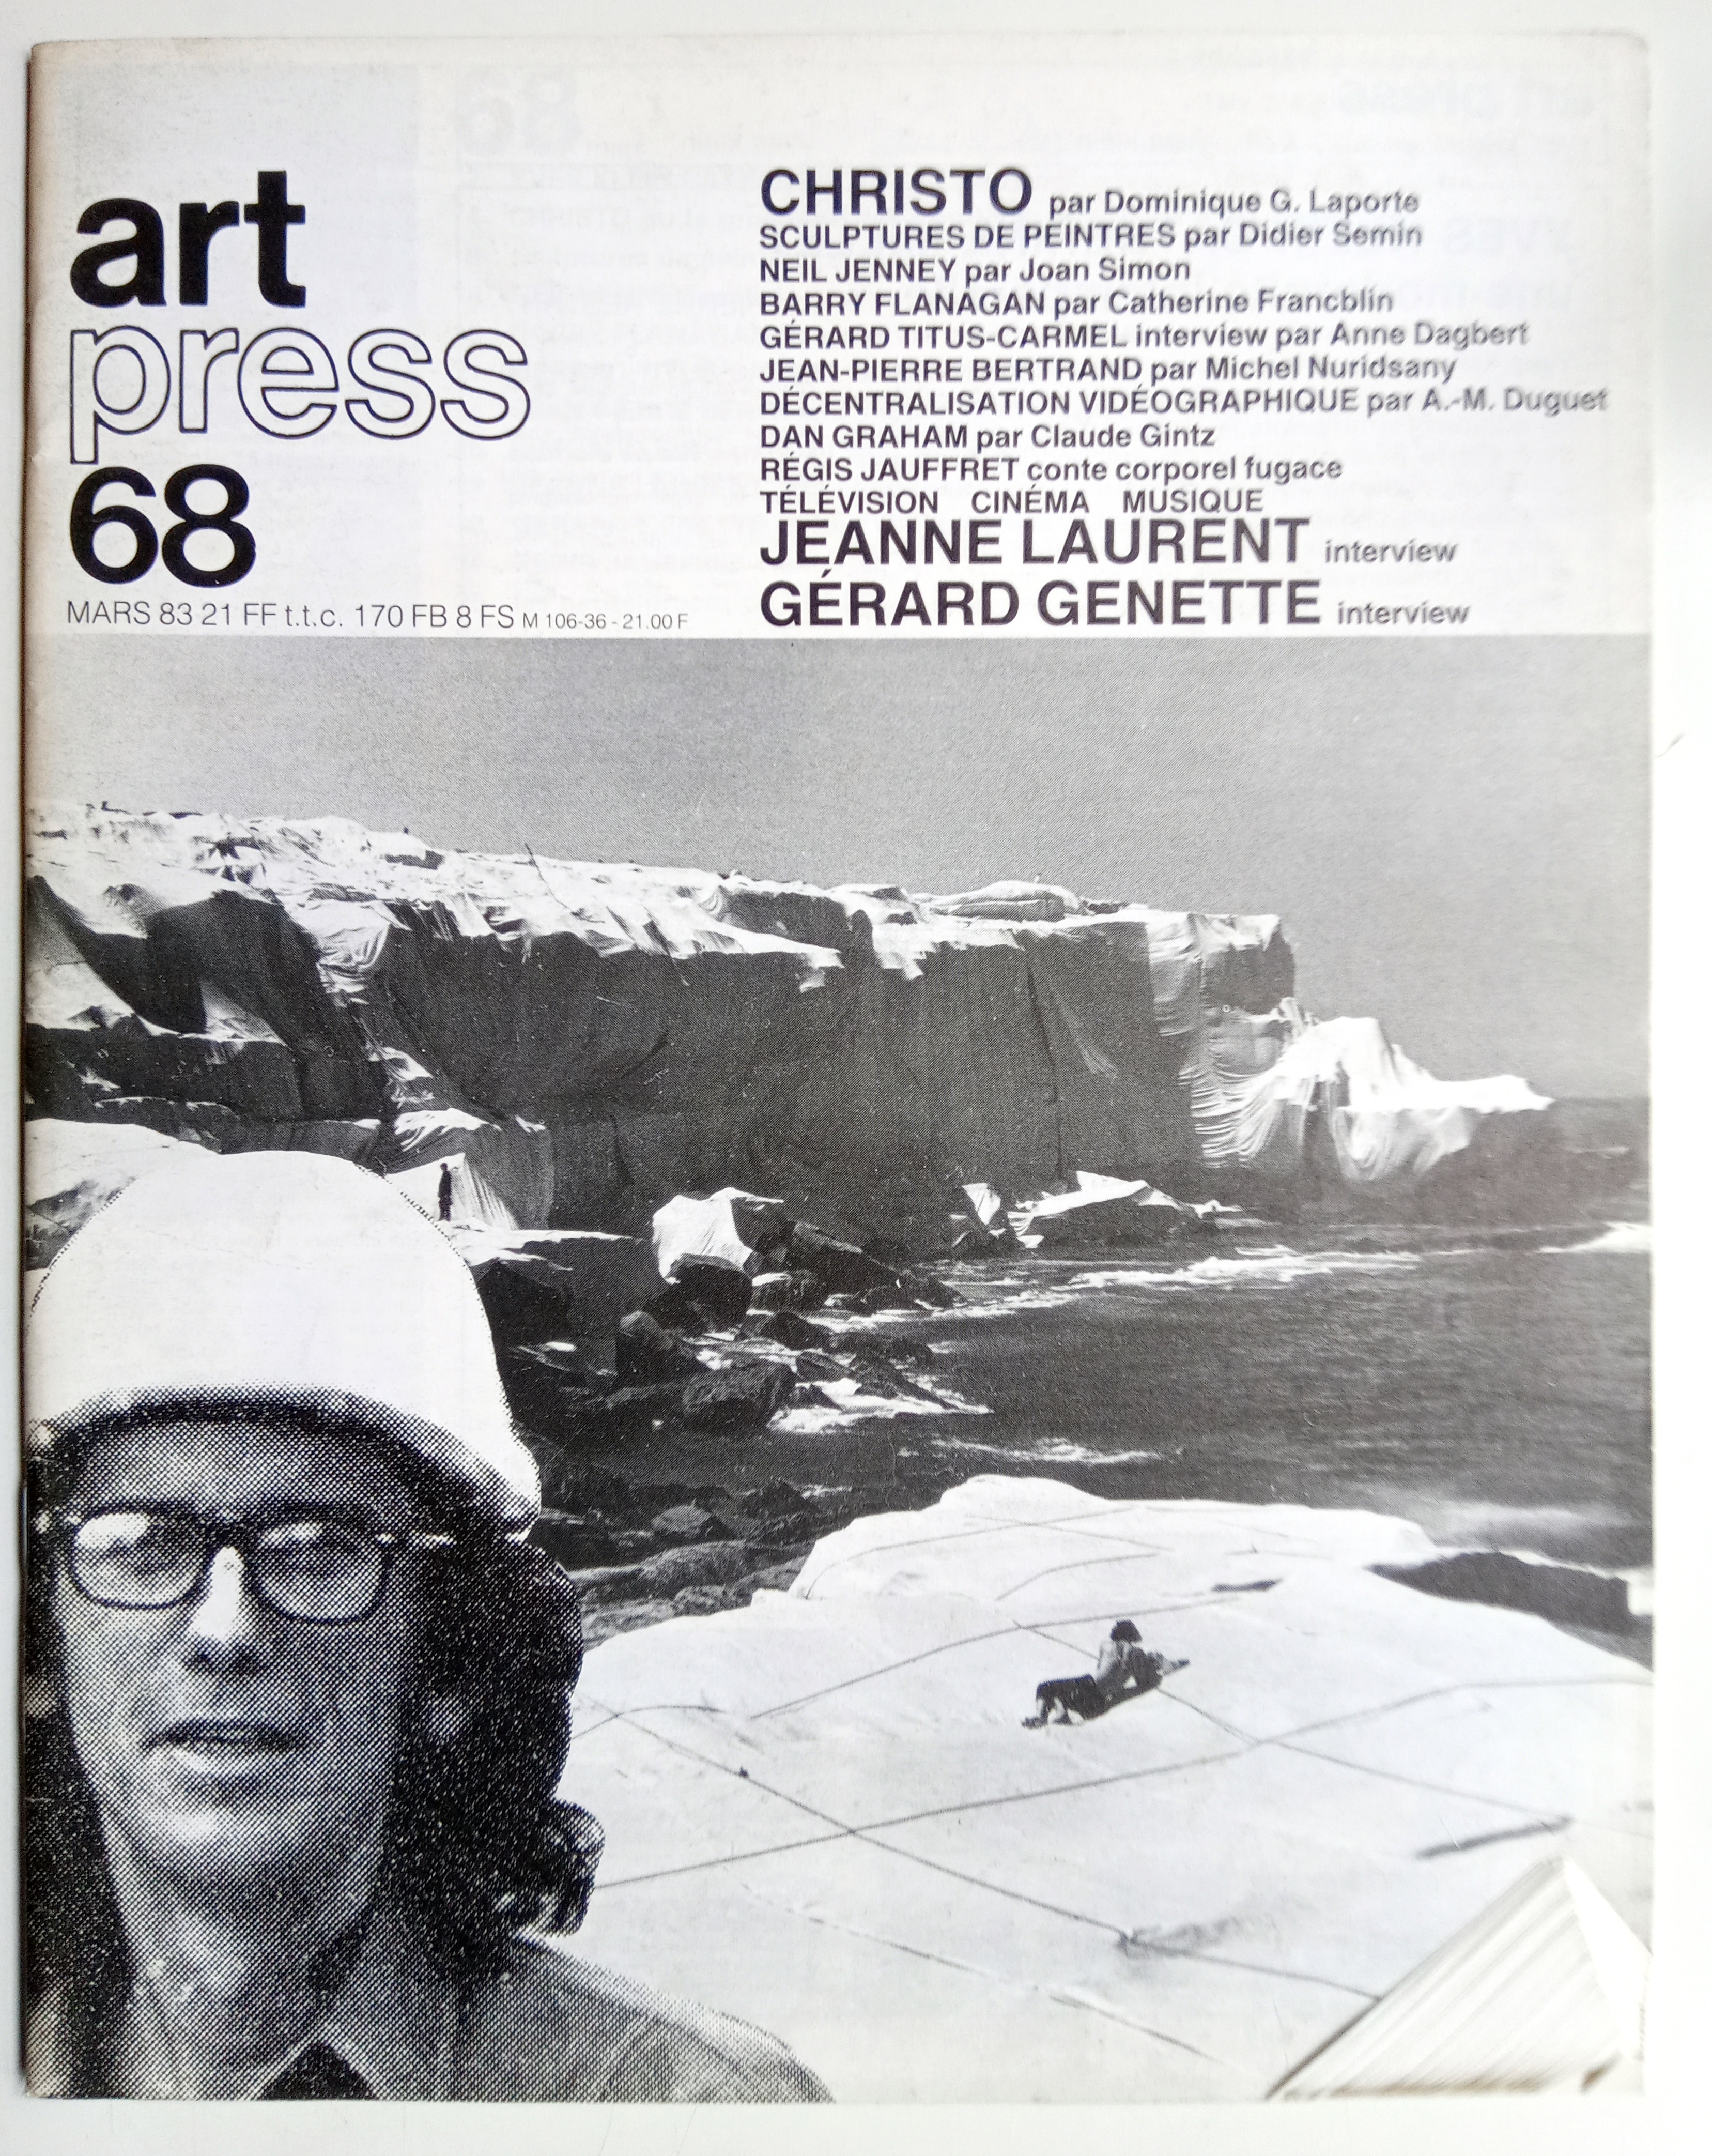 art press n°68 mars 1983 Christo Jenney Titus-Carmel Jauffret Genette Flanagan 